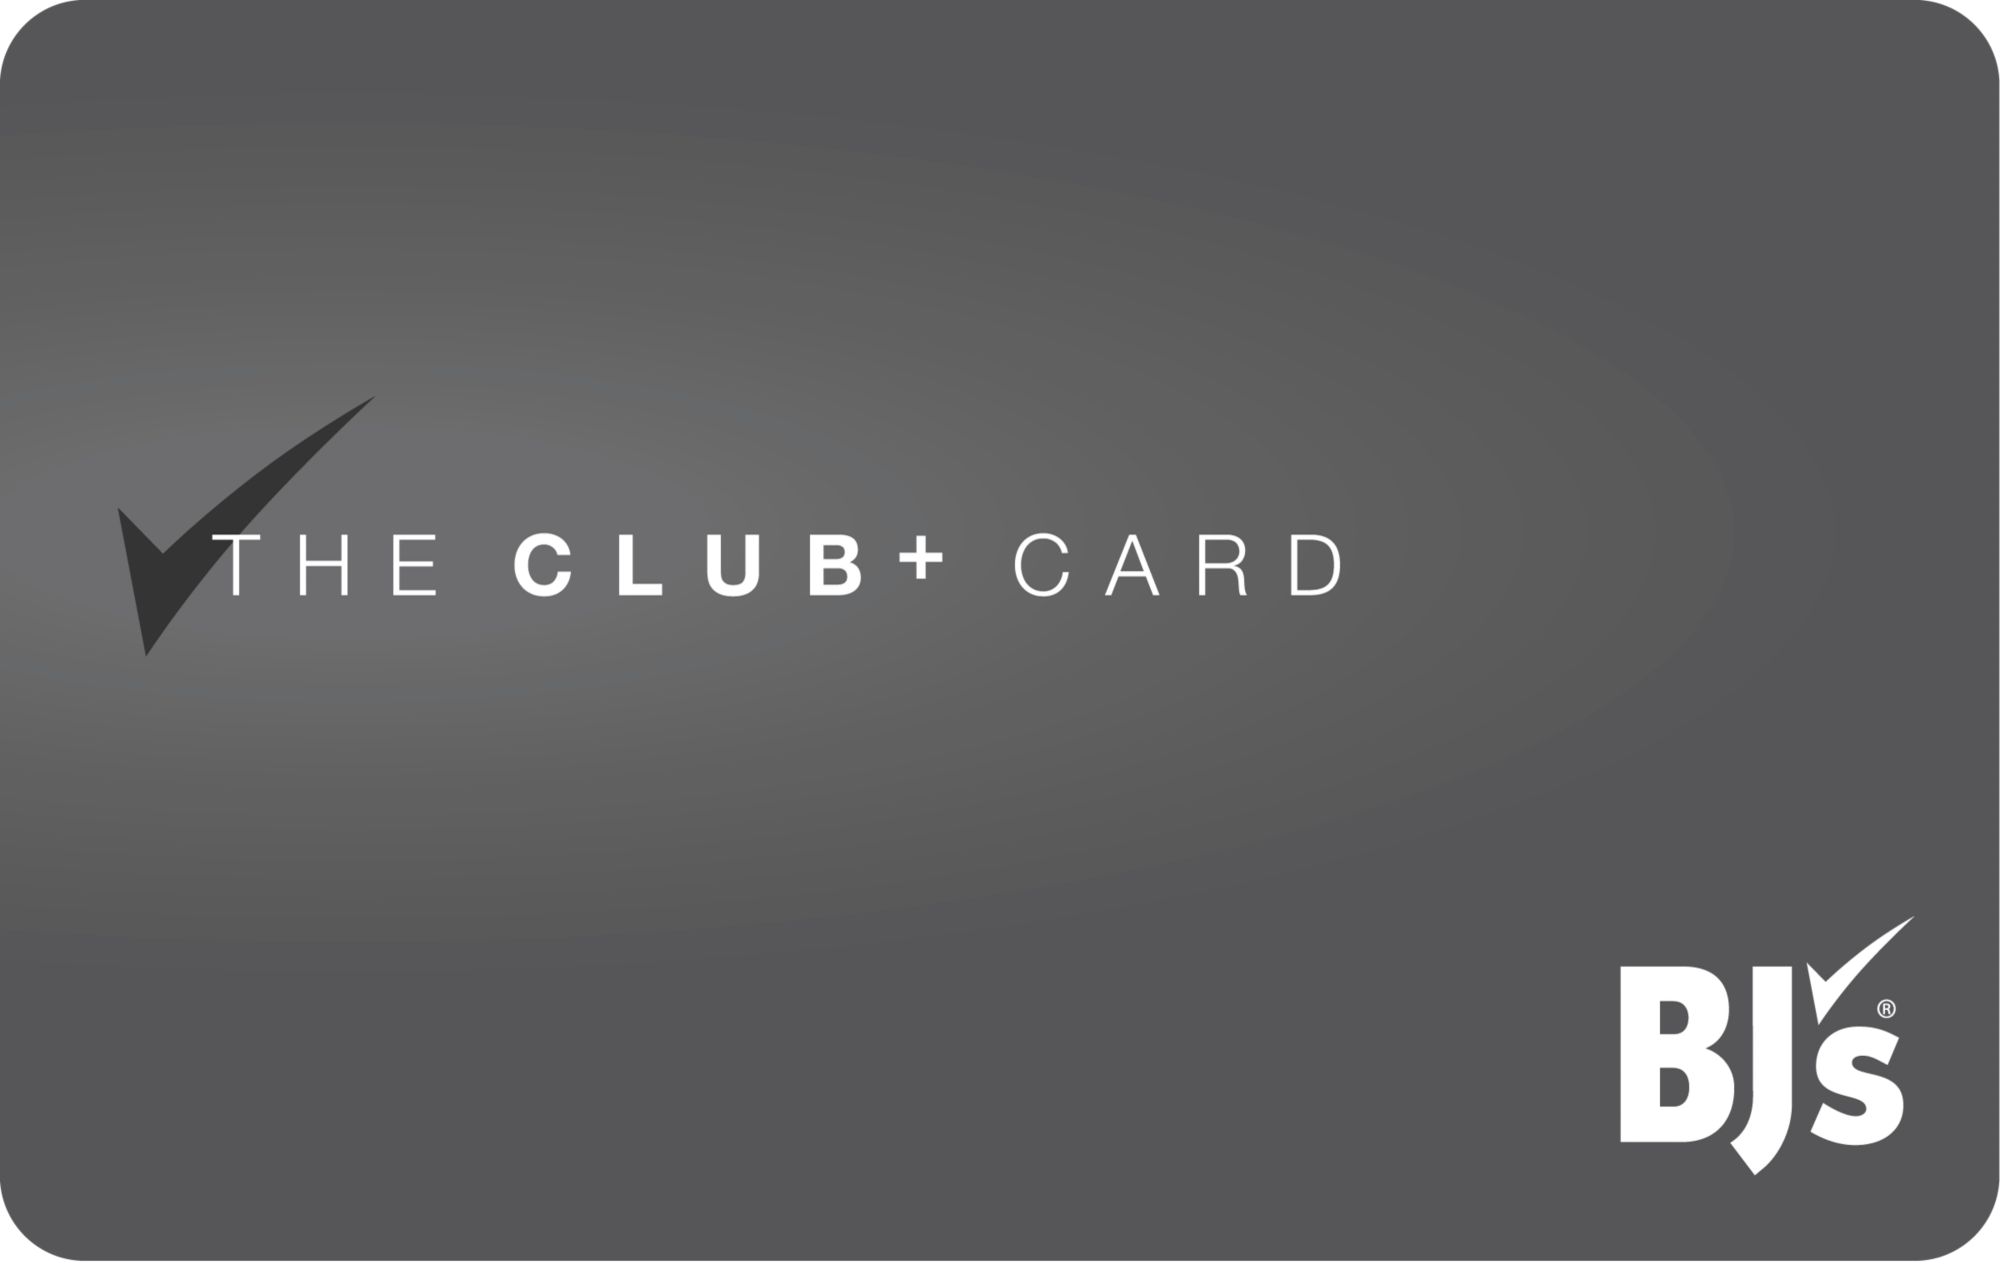 BJ’s Club+ Card Membership